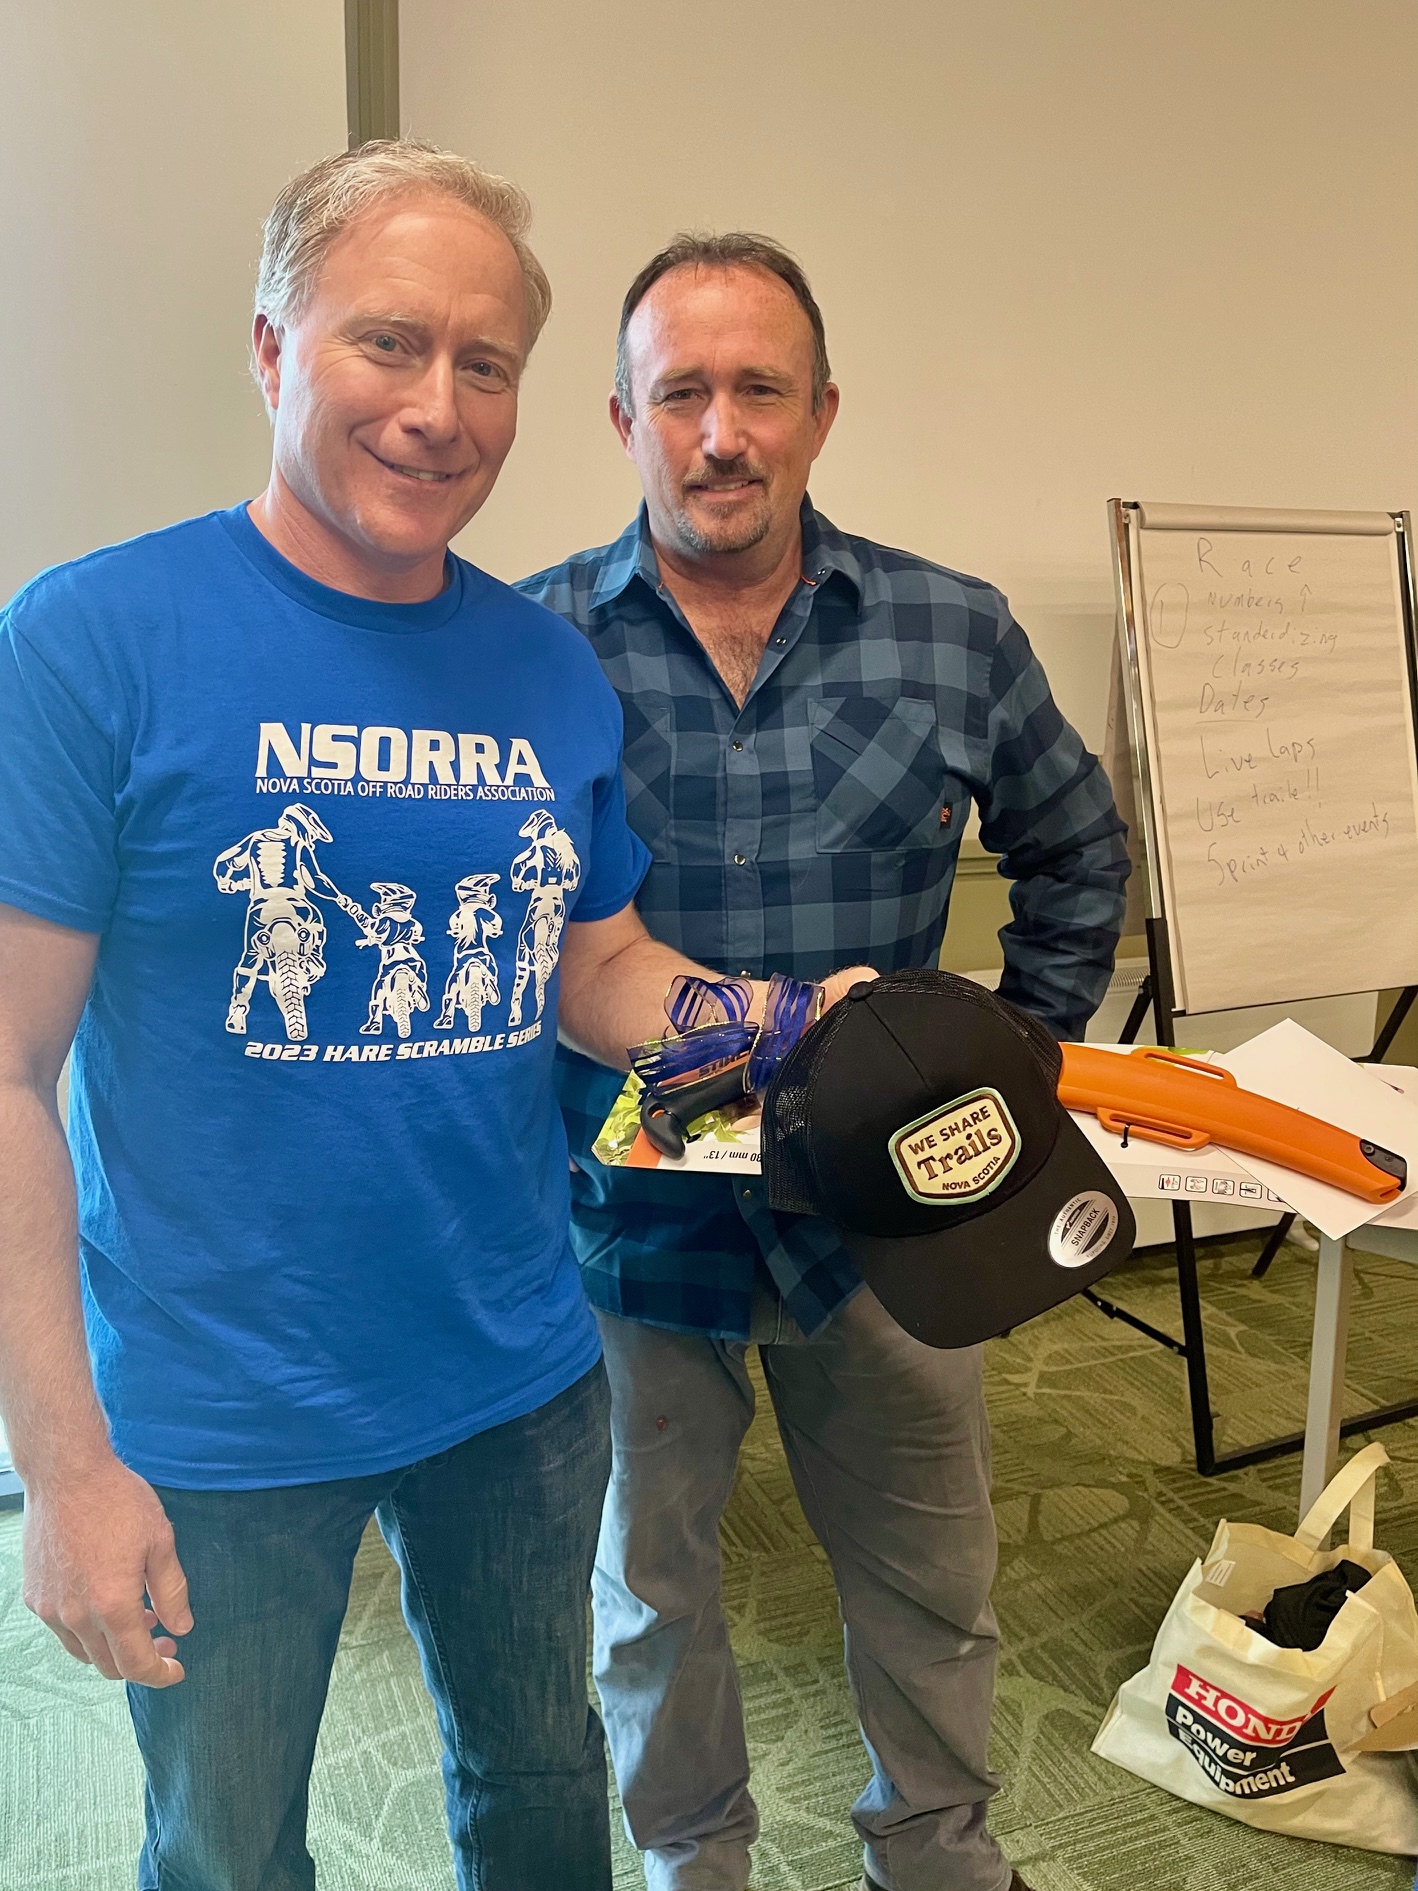 Neil receiving a gift from NSORRA President Josh Kelly